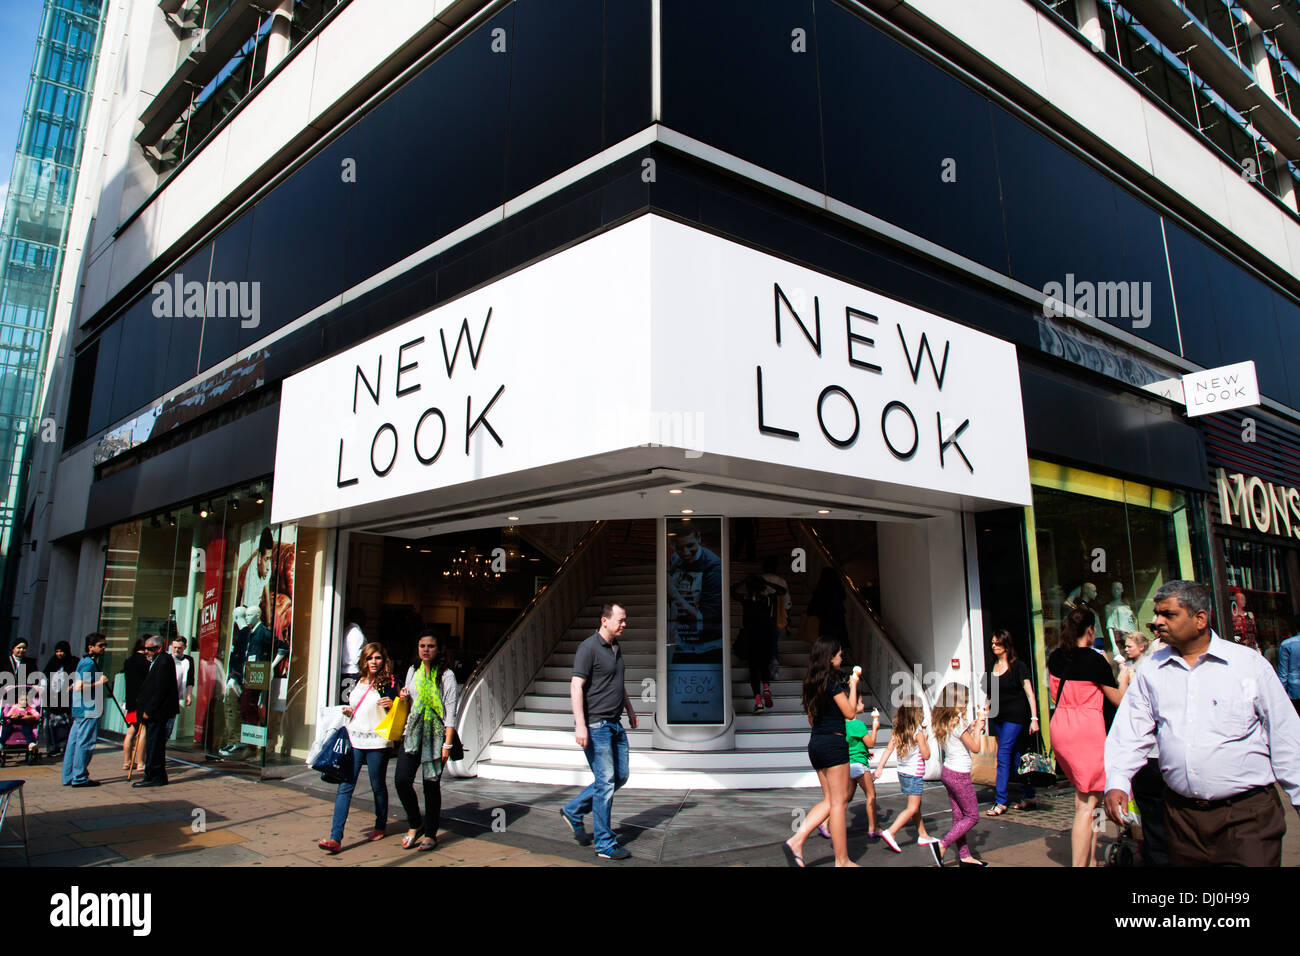 New Look shop, Oxford Street, London Stock Photo - Alamy